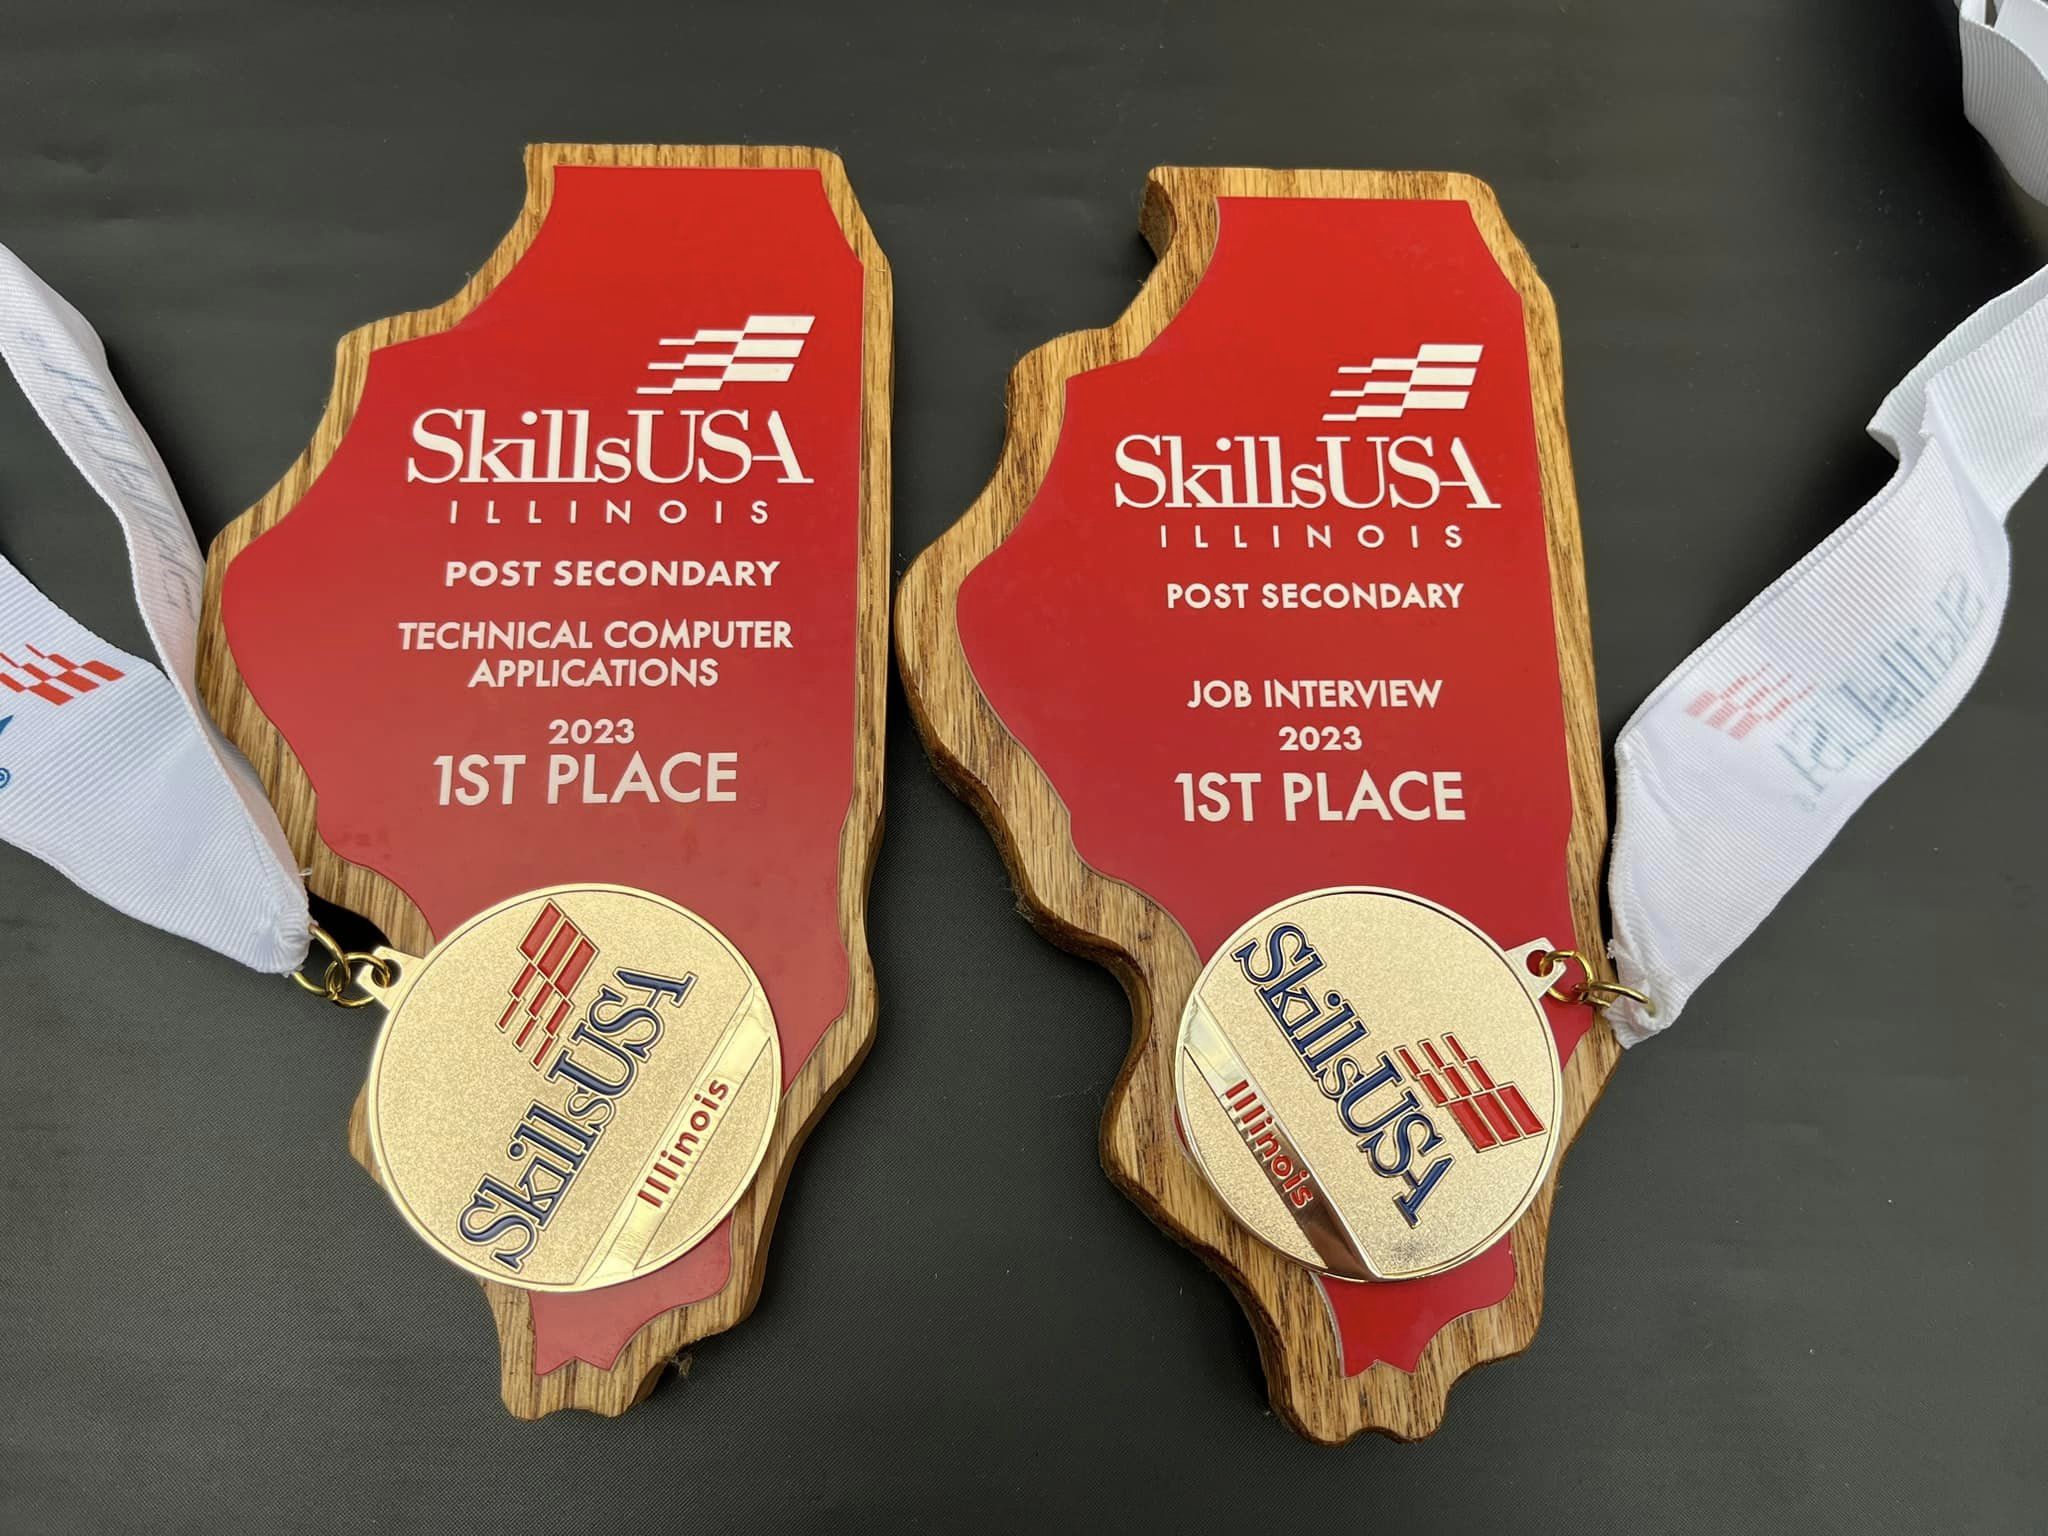 Skills USA awards